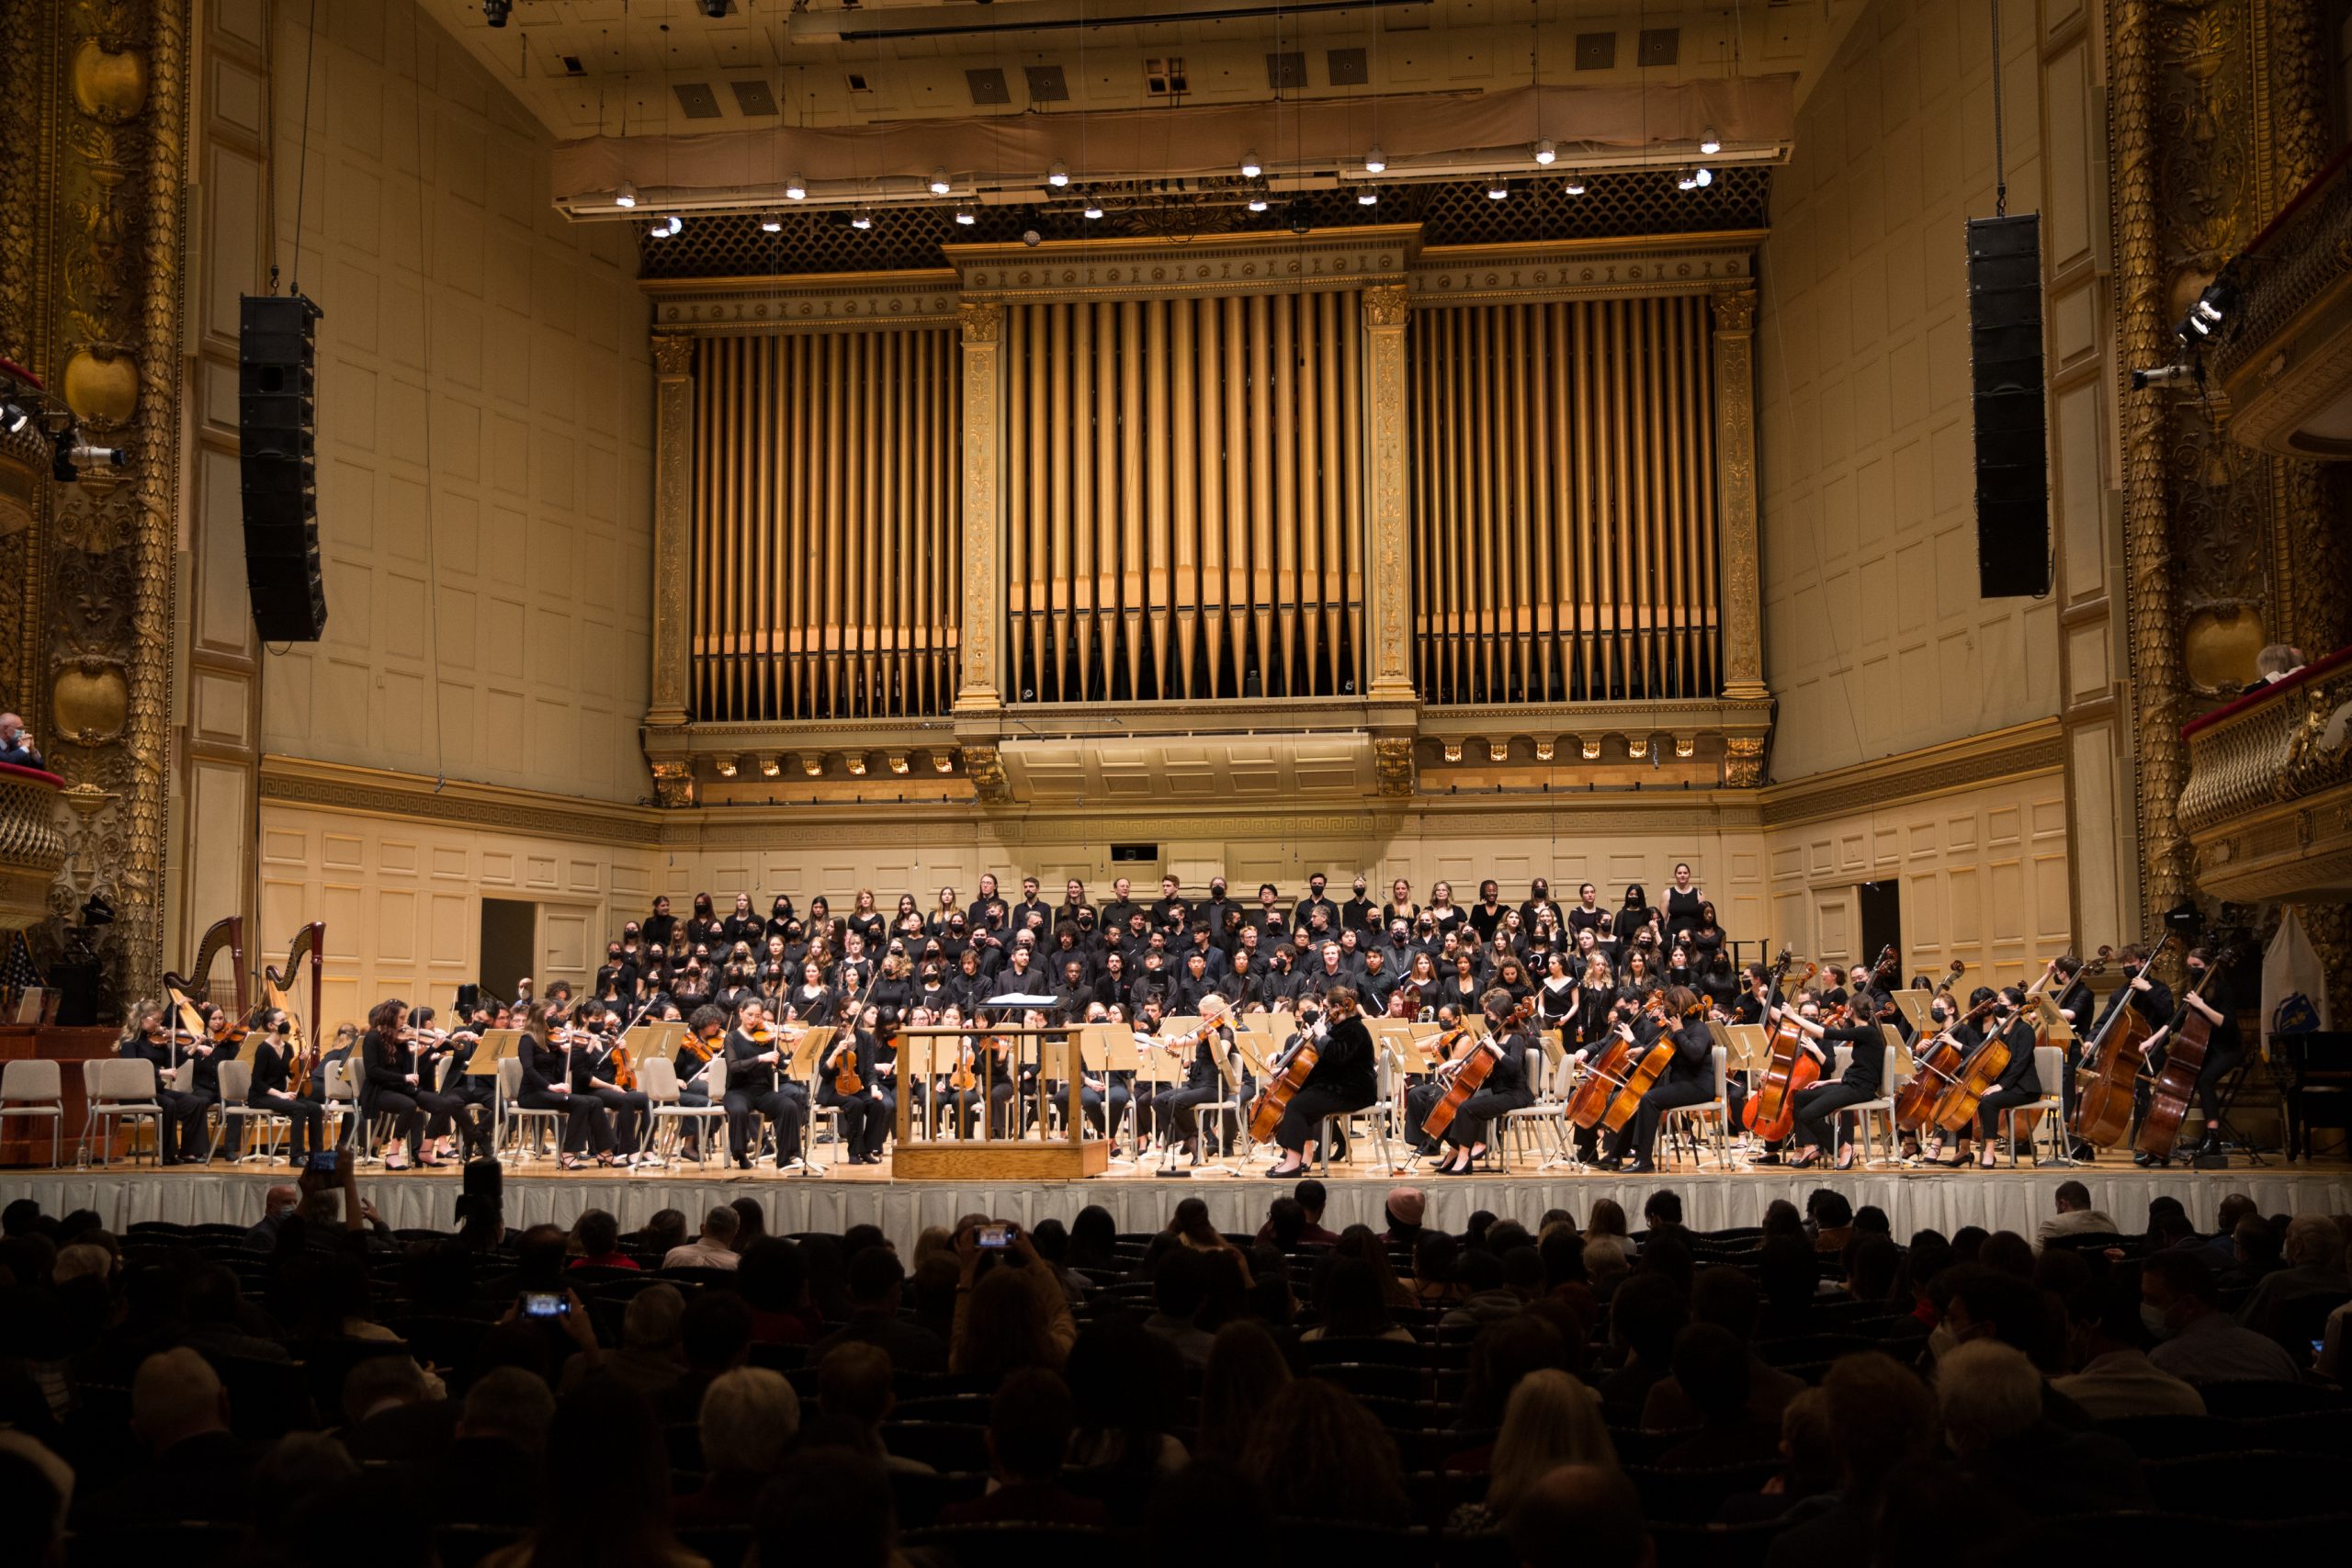 BU Concert at Symphony Hall